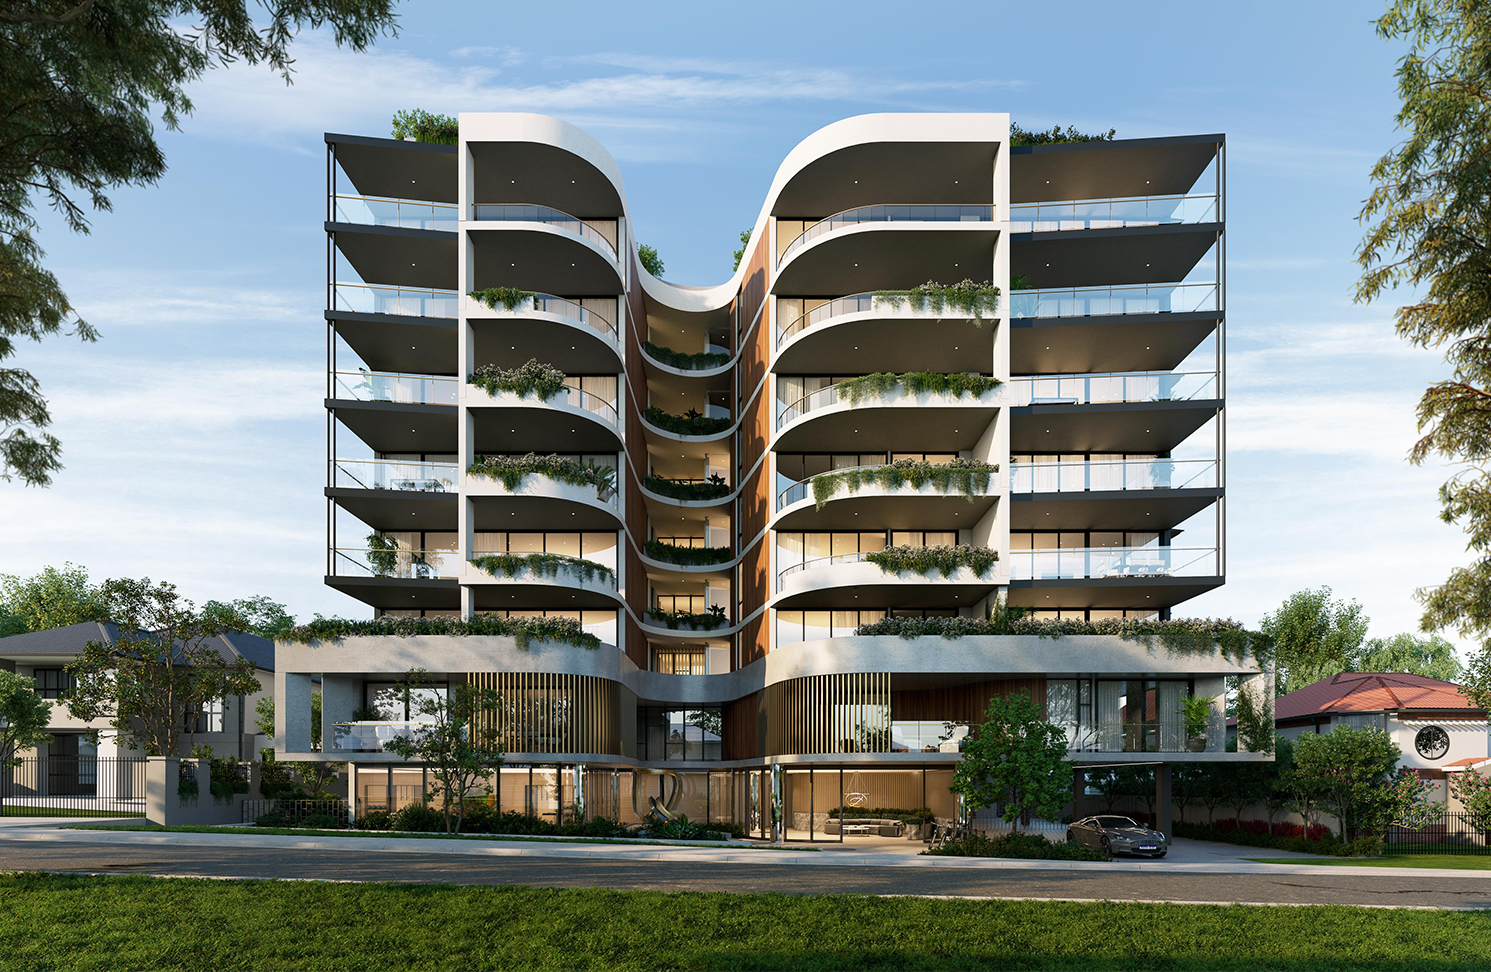 Sanctuary luxury apartments by DevelopWise